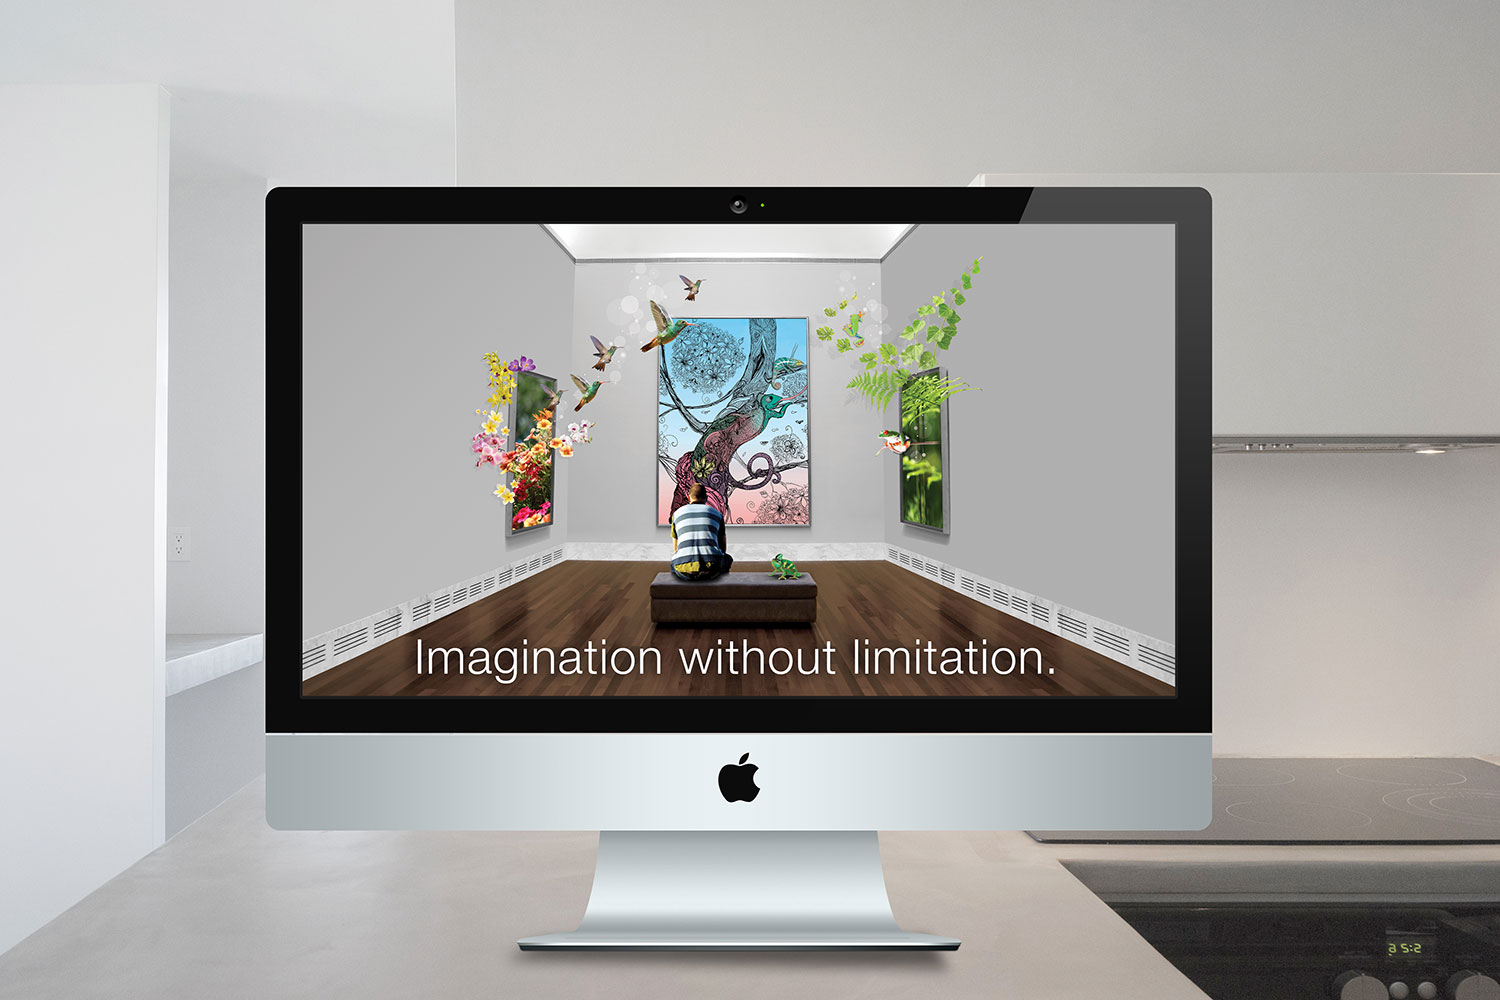 Toshiba campaign - Imagination without limitation